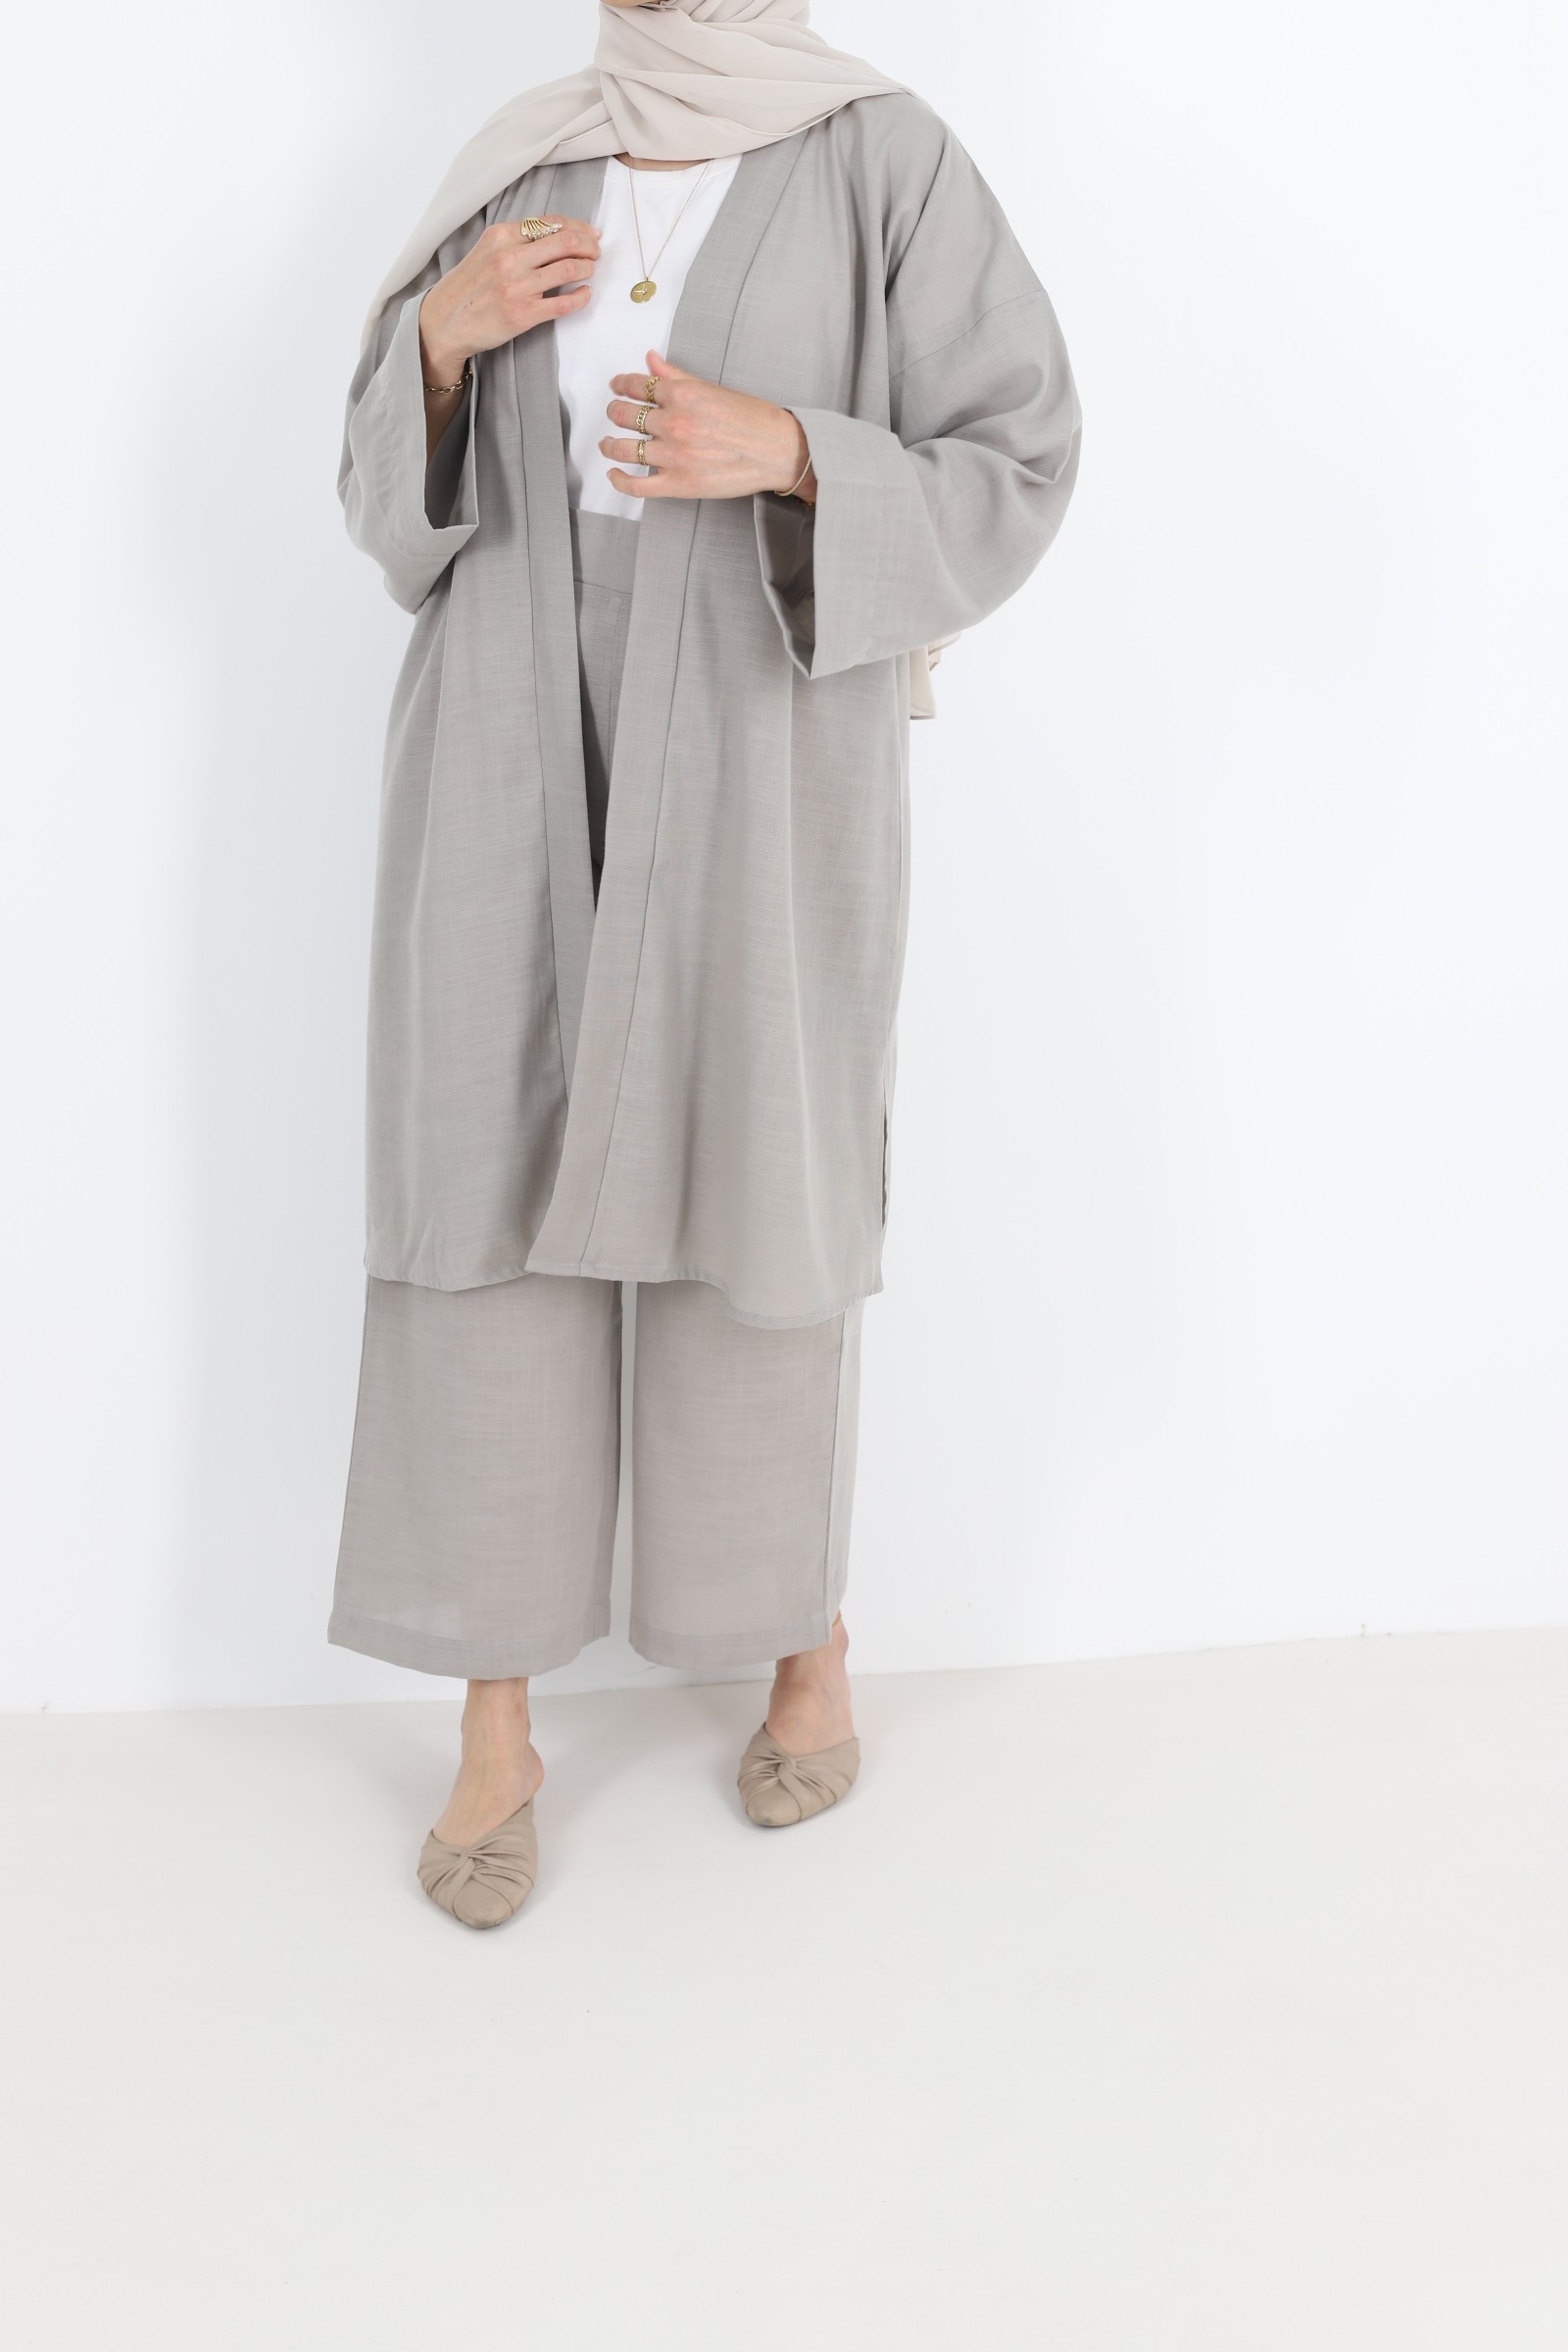 Summer pantsuit for modest women - summer collection